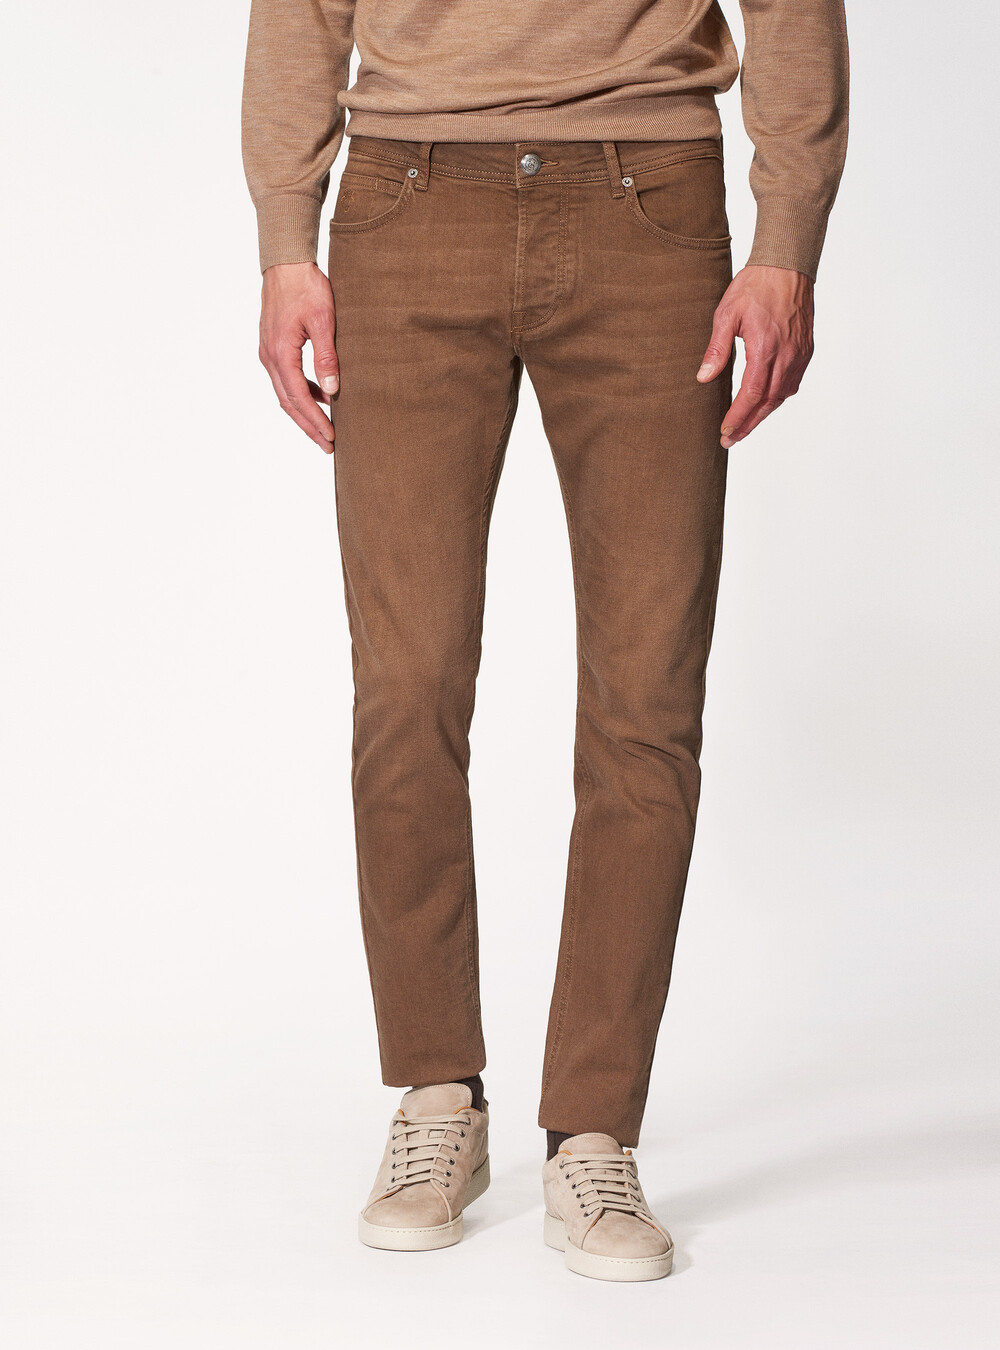 Pantaloni 5 tasche tailor fit | Gutteridge | Jeans Uomo